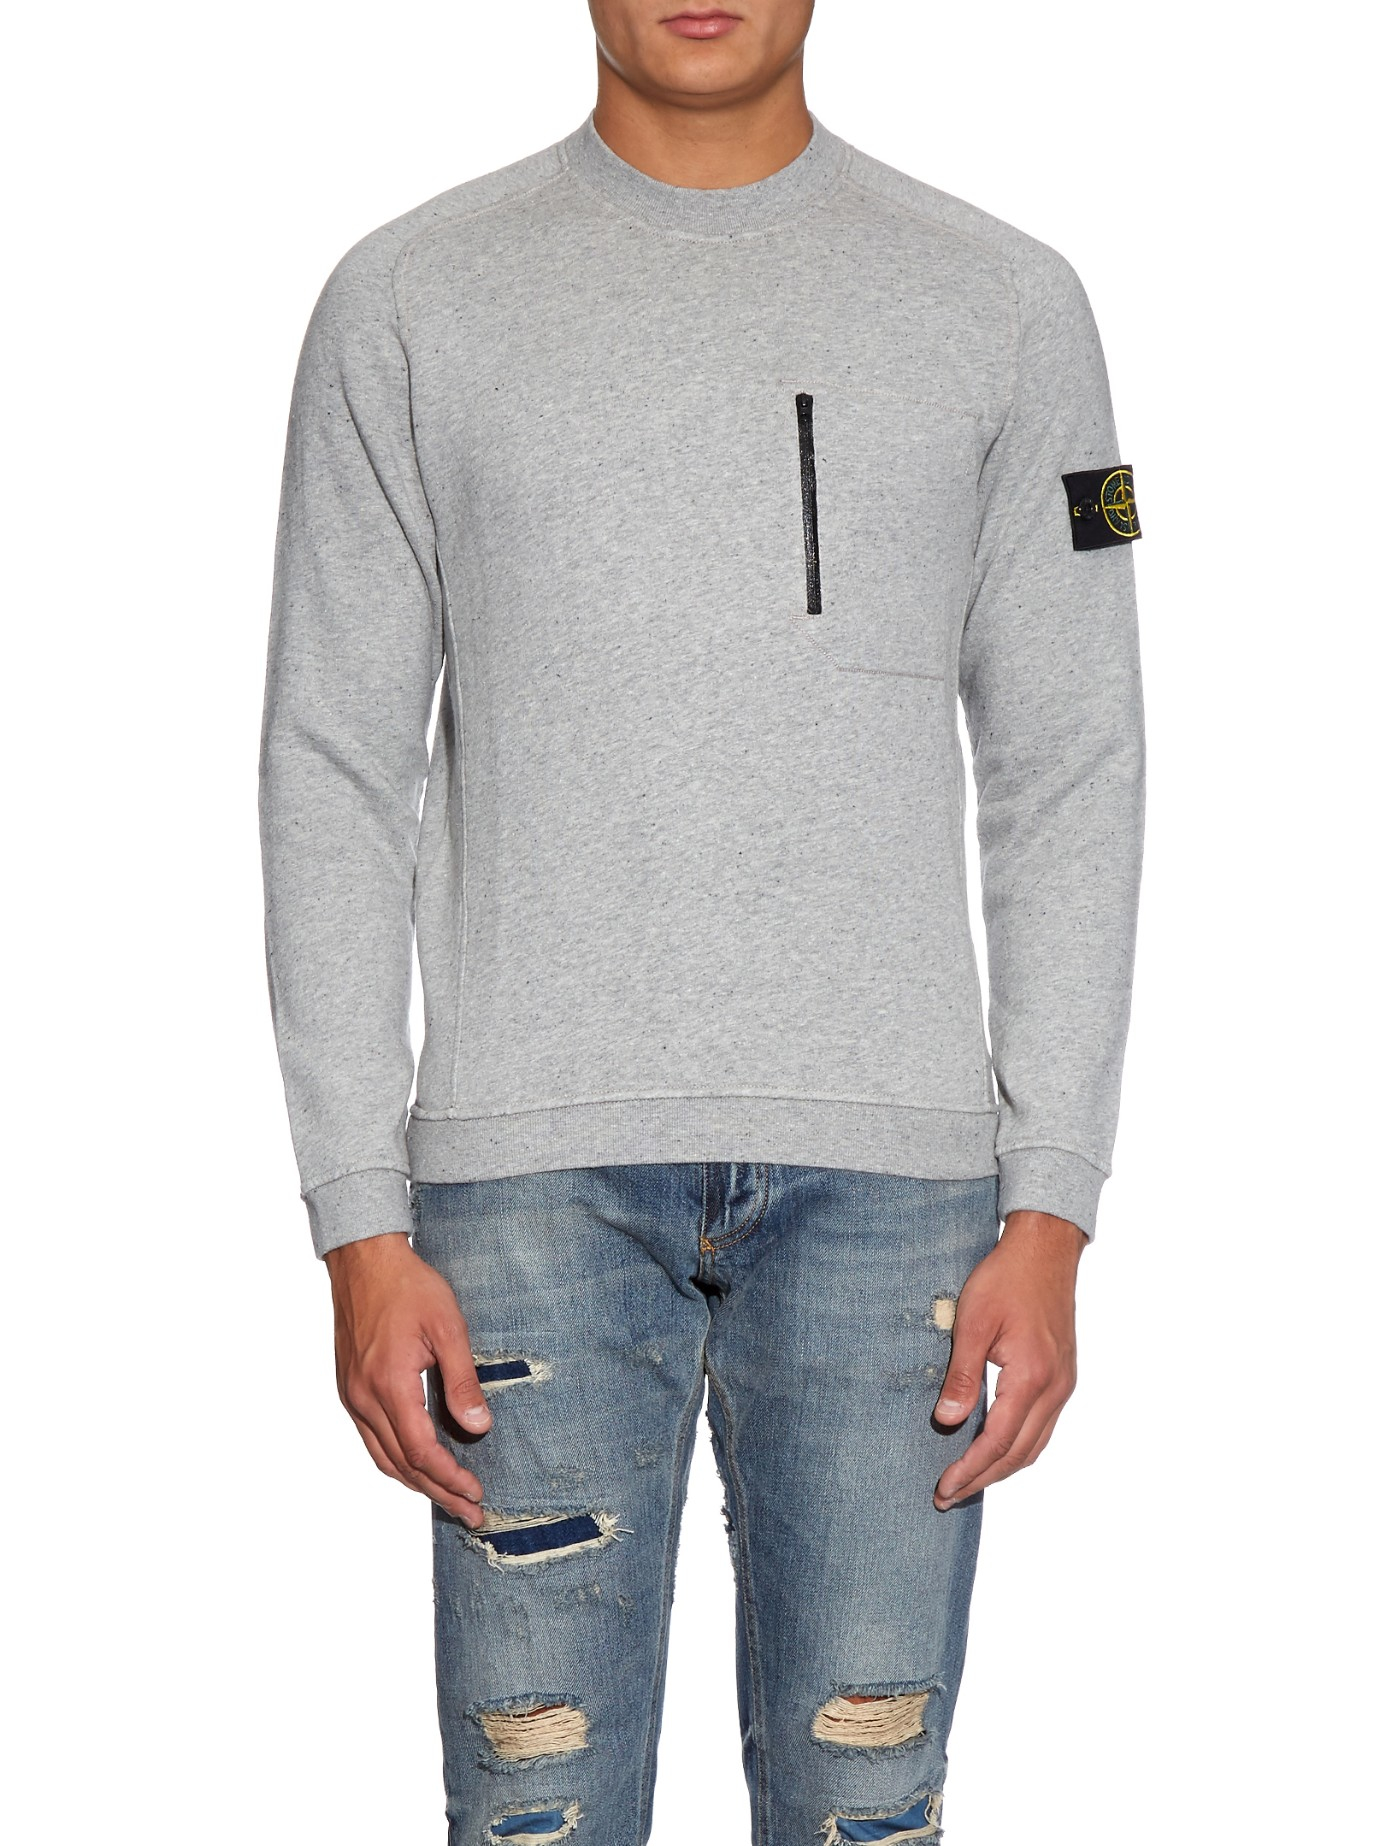 stone island sweatshirt with pocket,Quality assurance,protein 